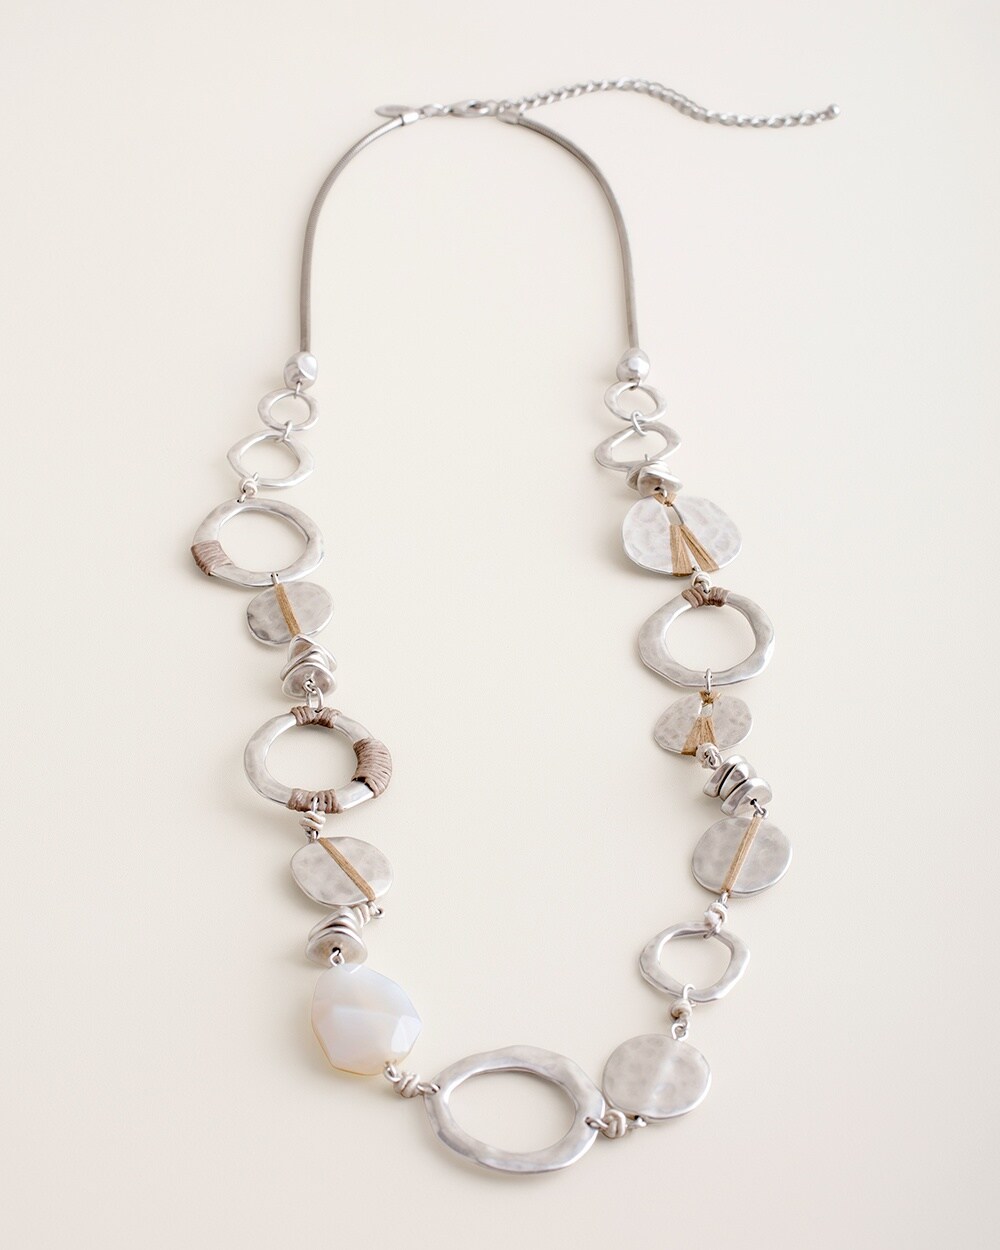 Threaded Silver-Tone Single-Strand Necklace